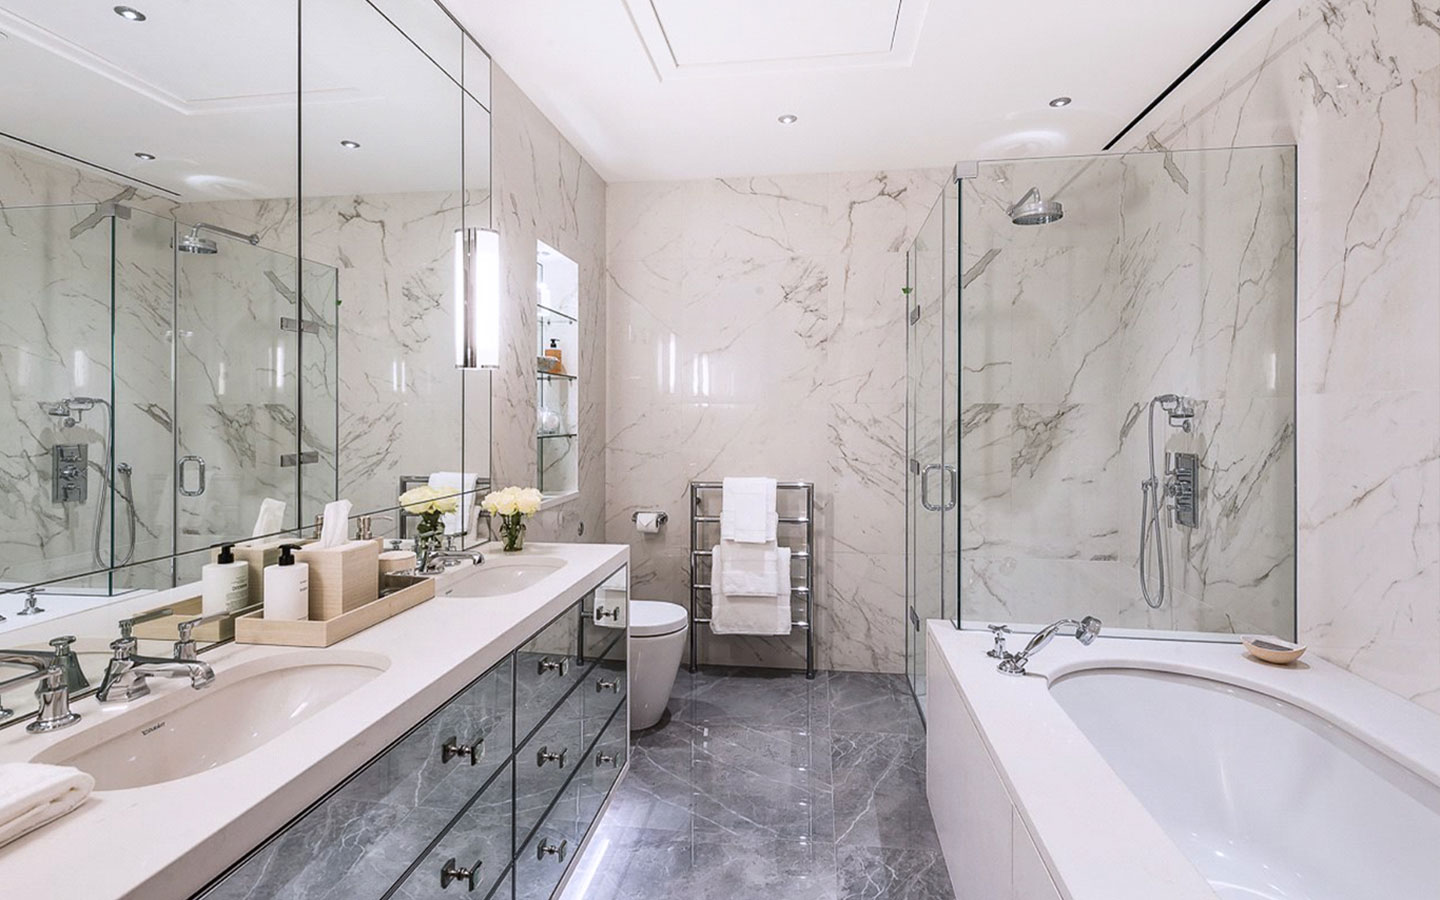 Custom designed double vanity and bathtub surround clad with Frosty Carrina quartz stone